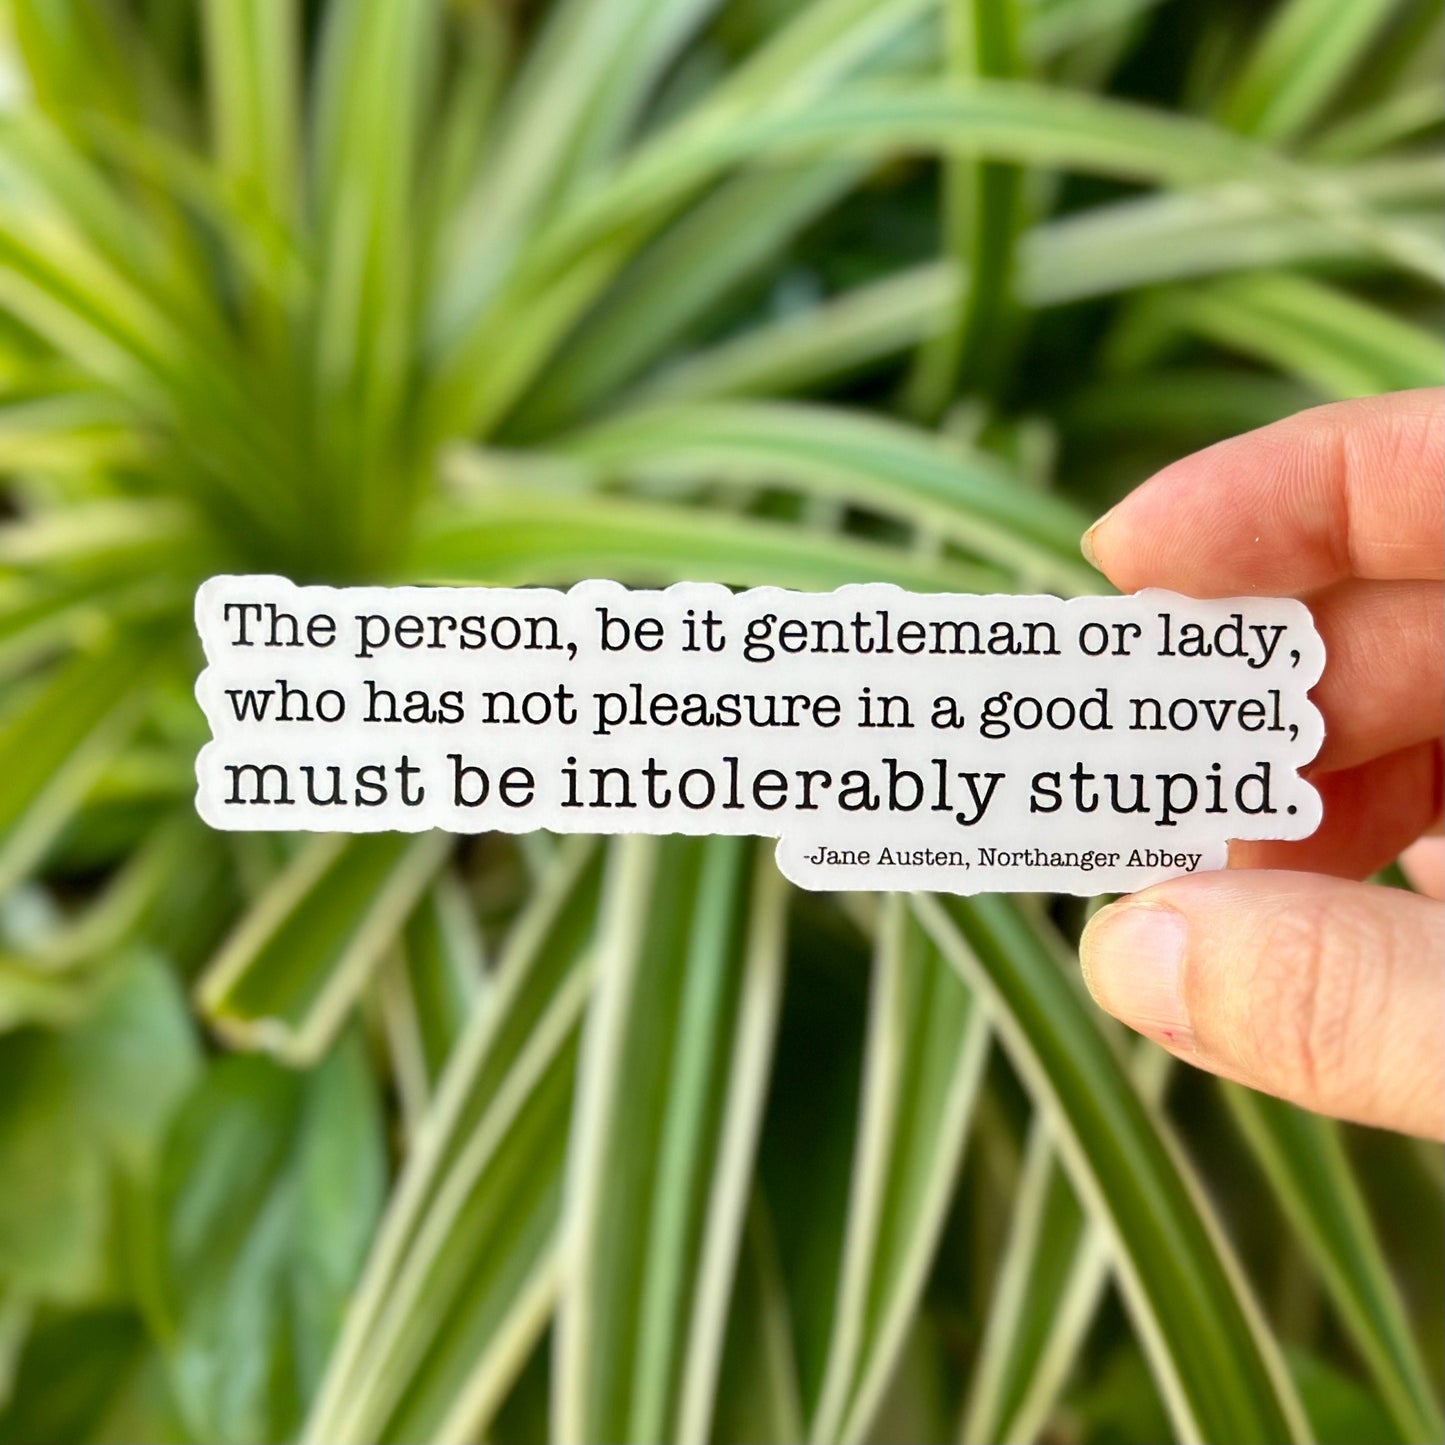 "The pleasure of a good novel" Sticker